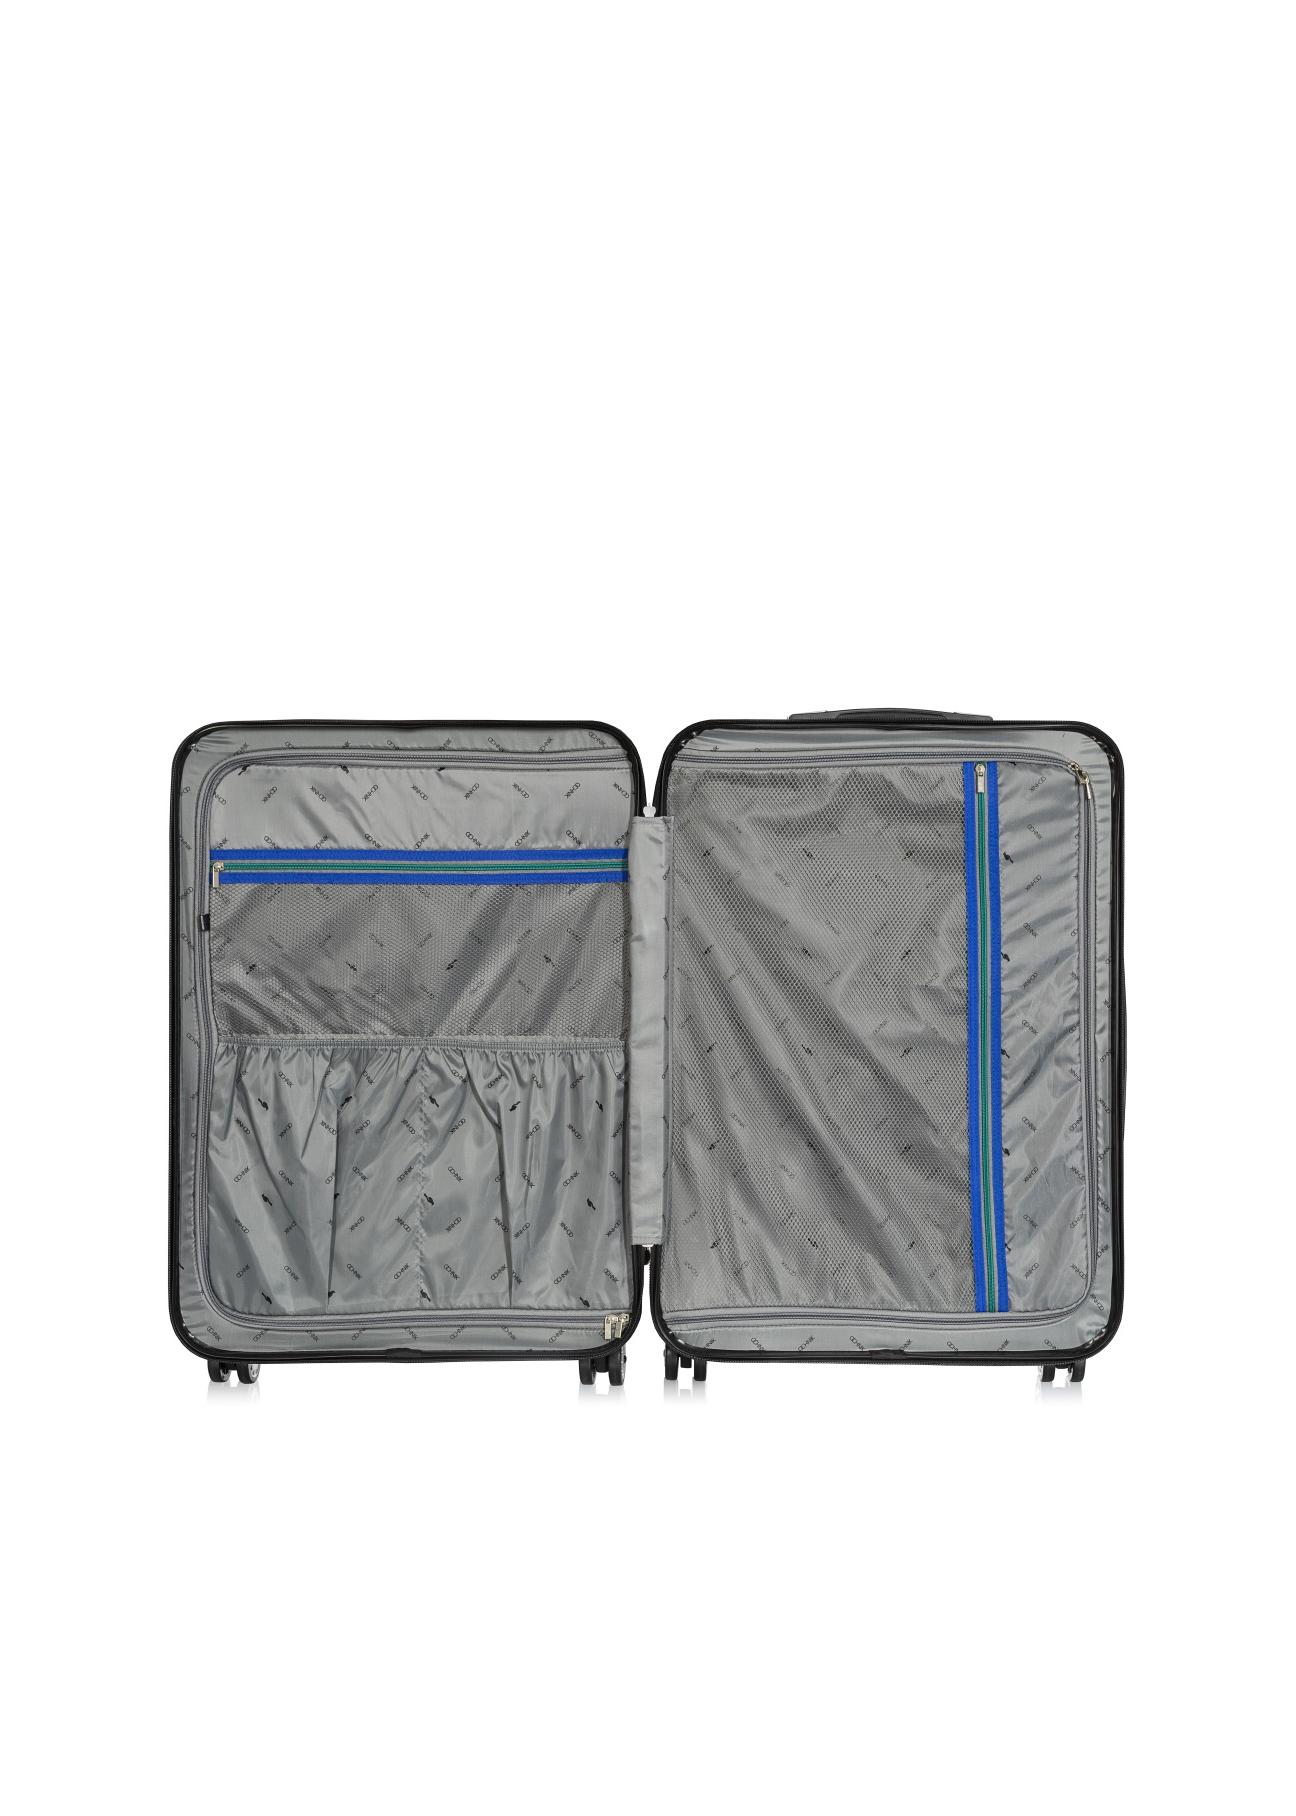 Duża walizka na kółkach WALAB-0031-51-28